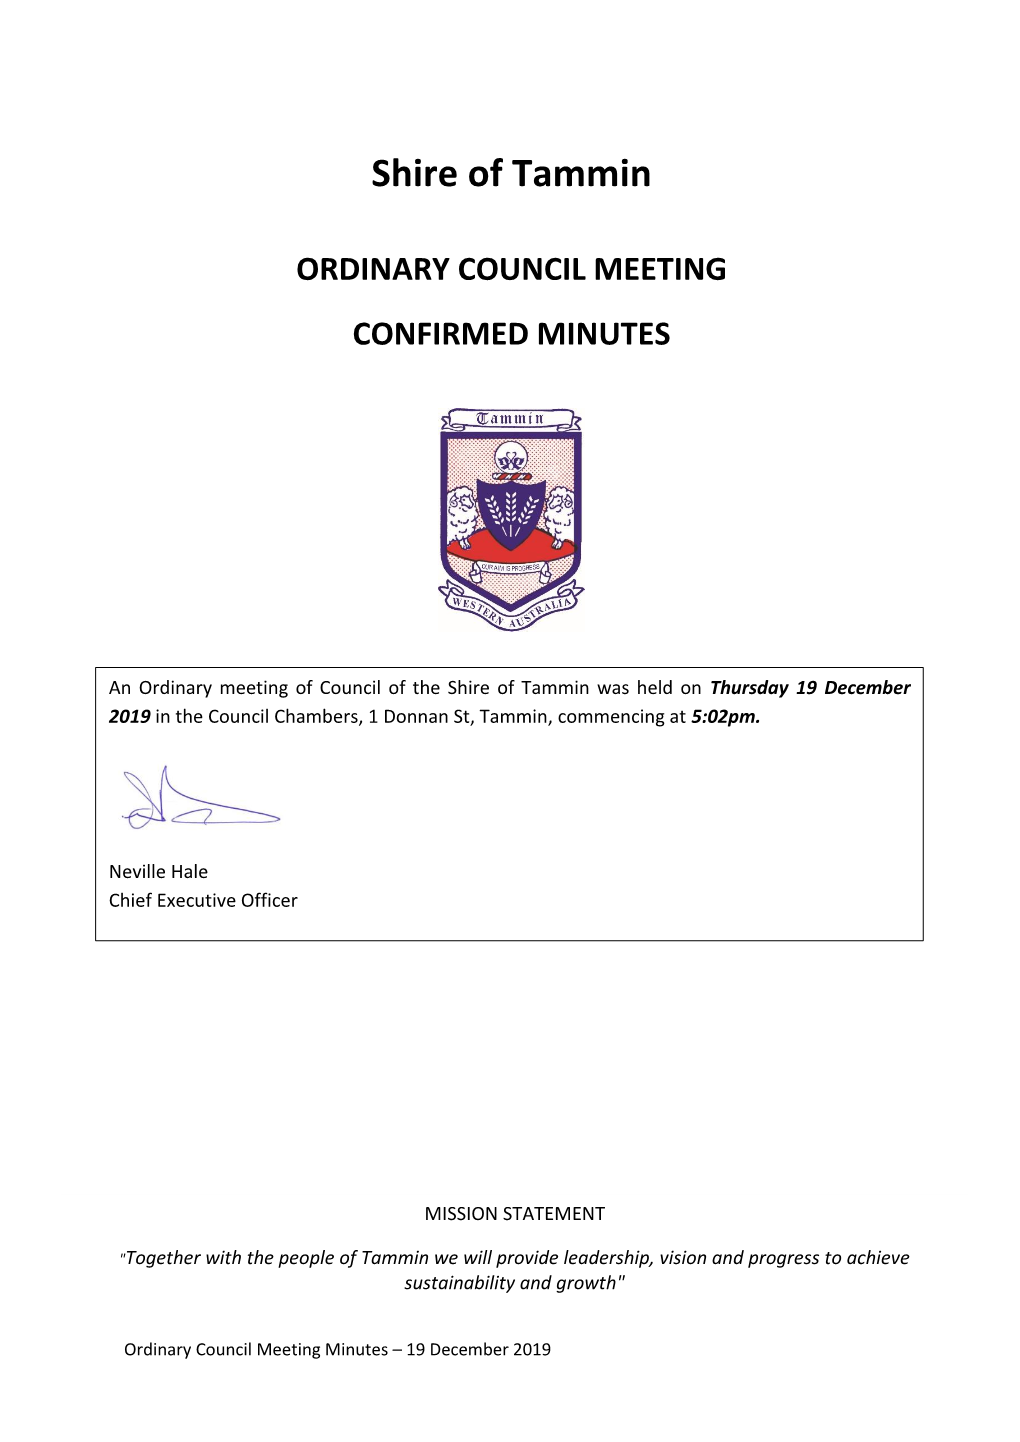 19 December Ordinary Council Meeting Minutes